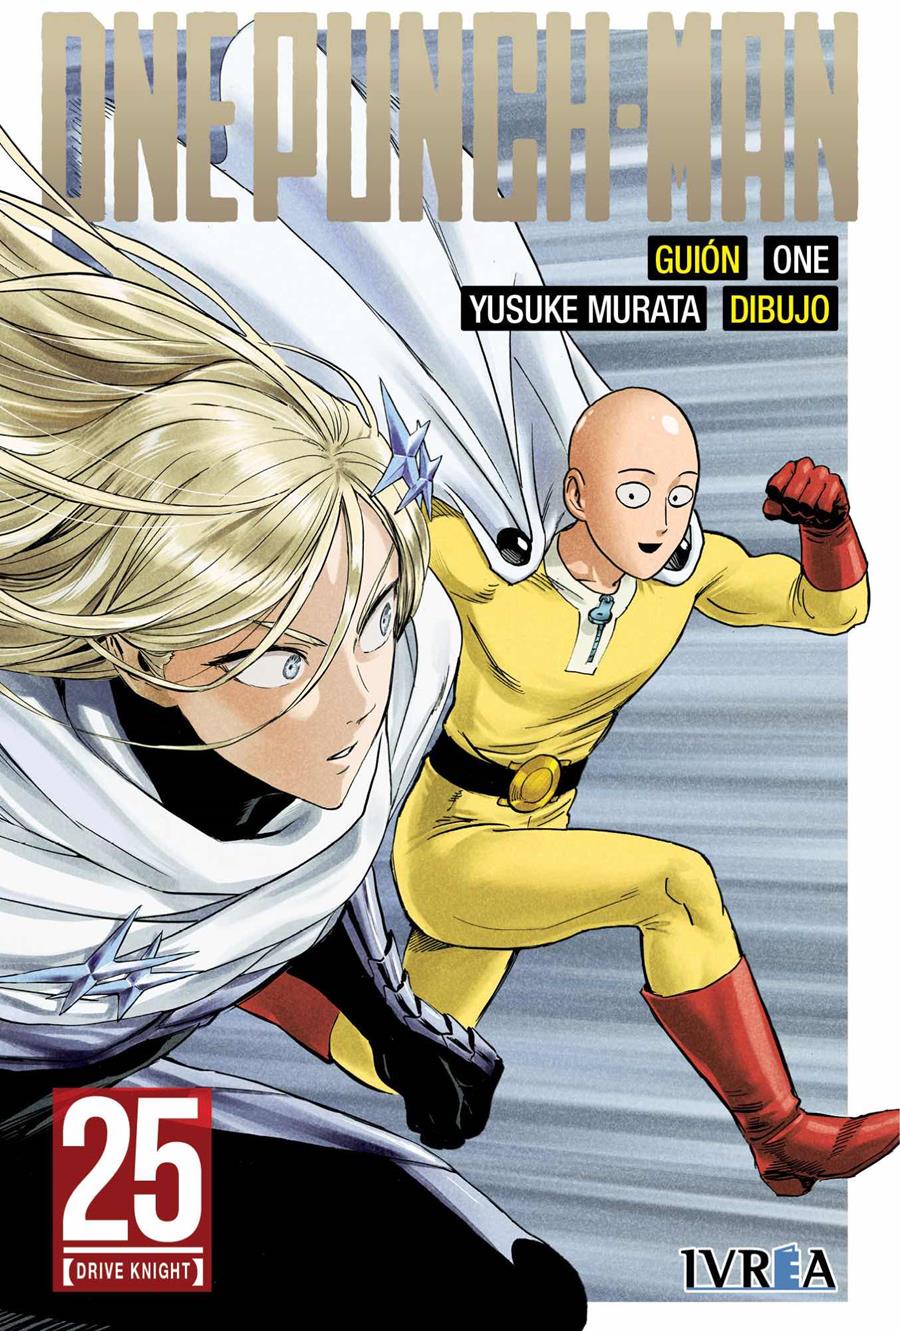 One punch-man 25 | N1222-IVR19 | One, Yusuke Murata | Terra de Còmic - Tu tienda de cómics online especializada en cómics, manga y merchandising